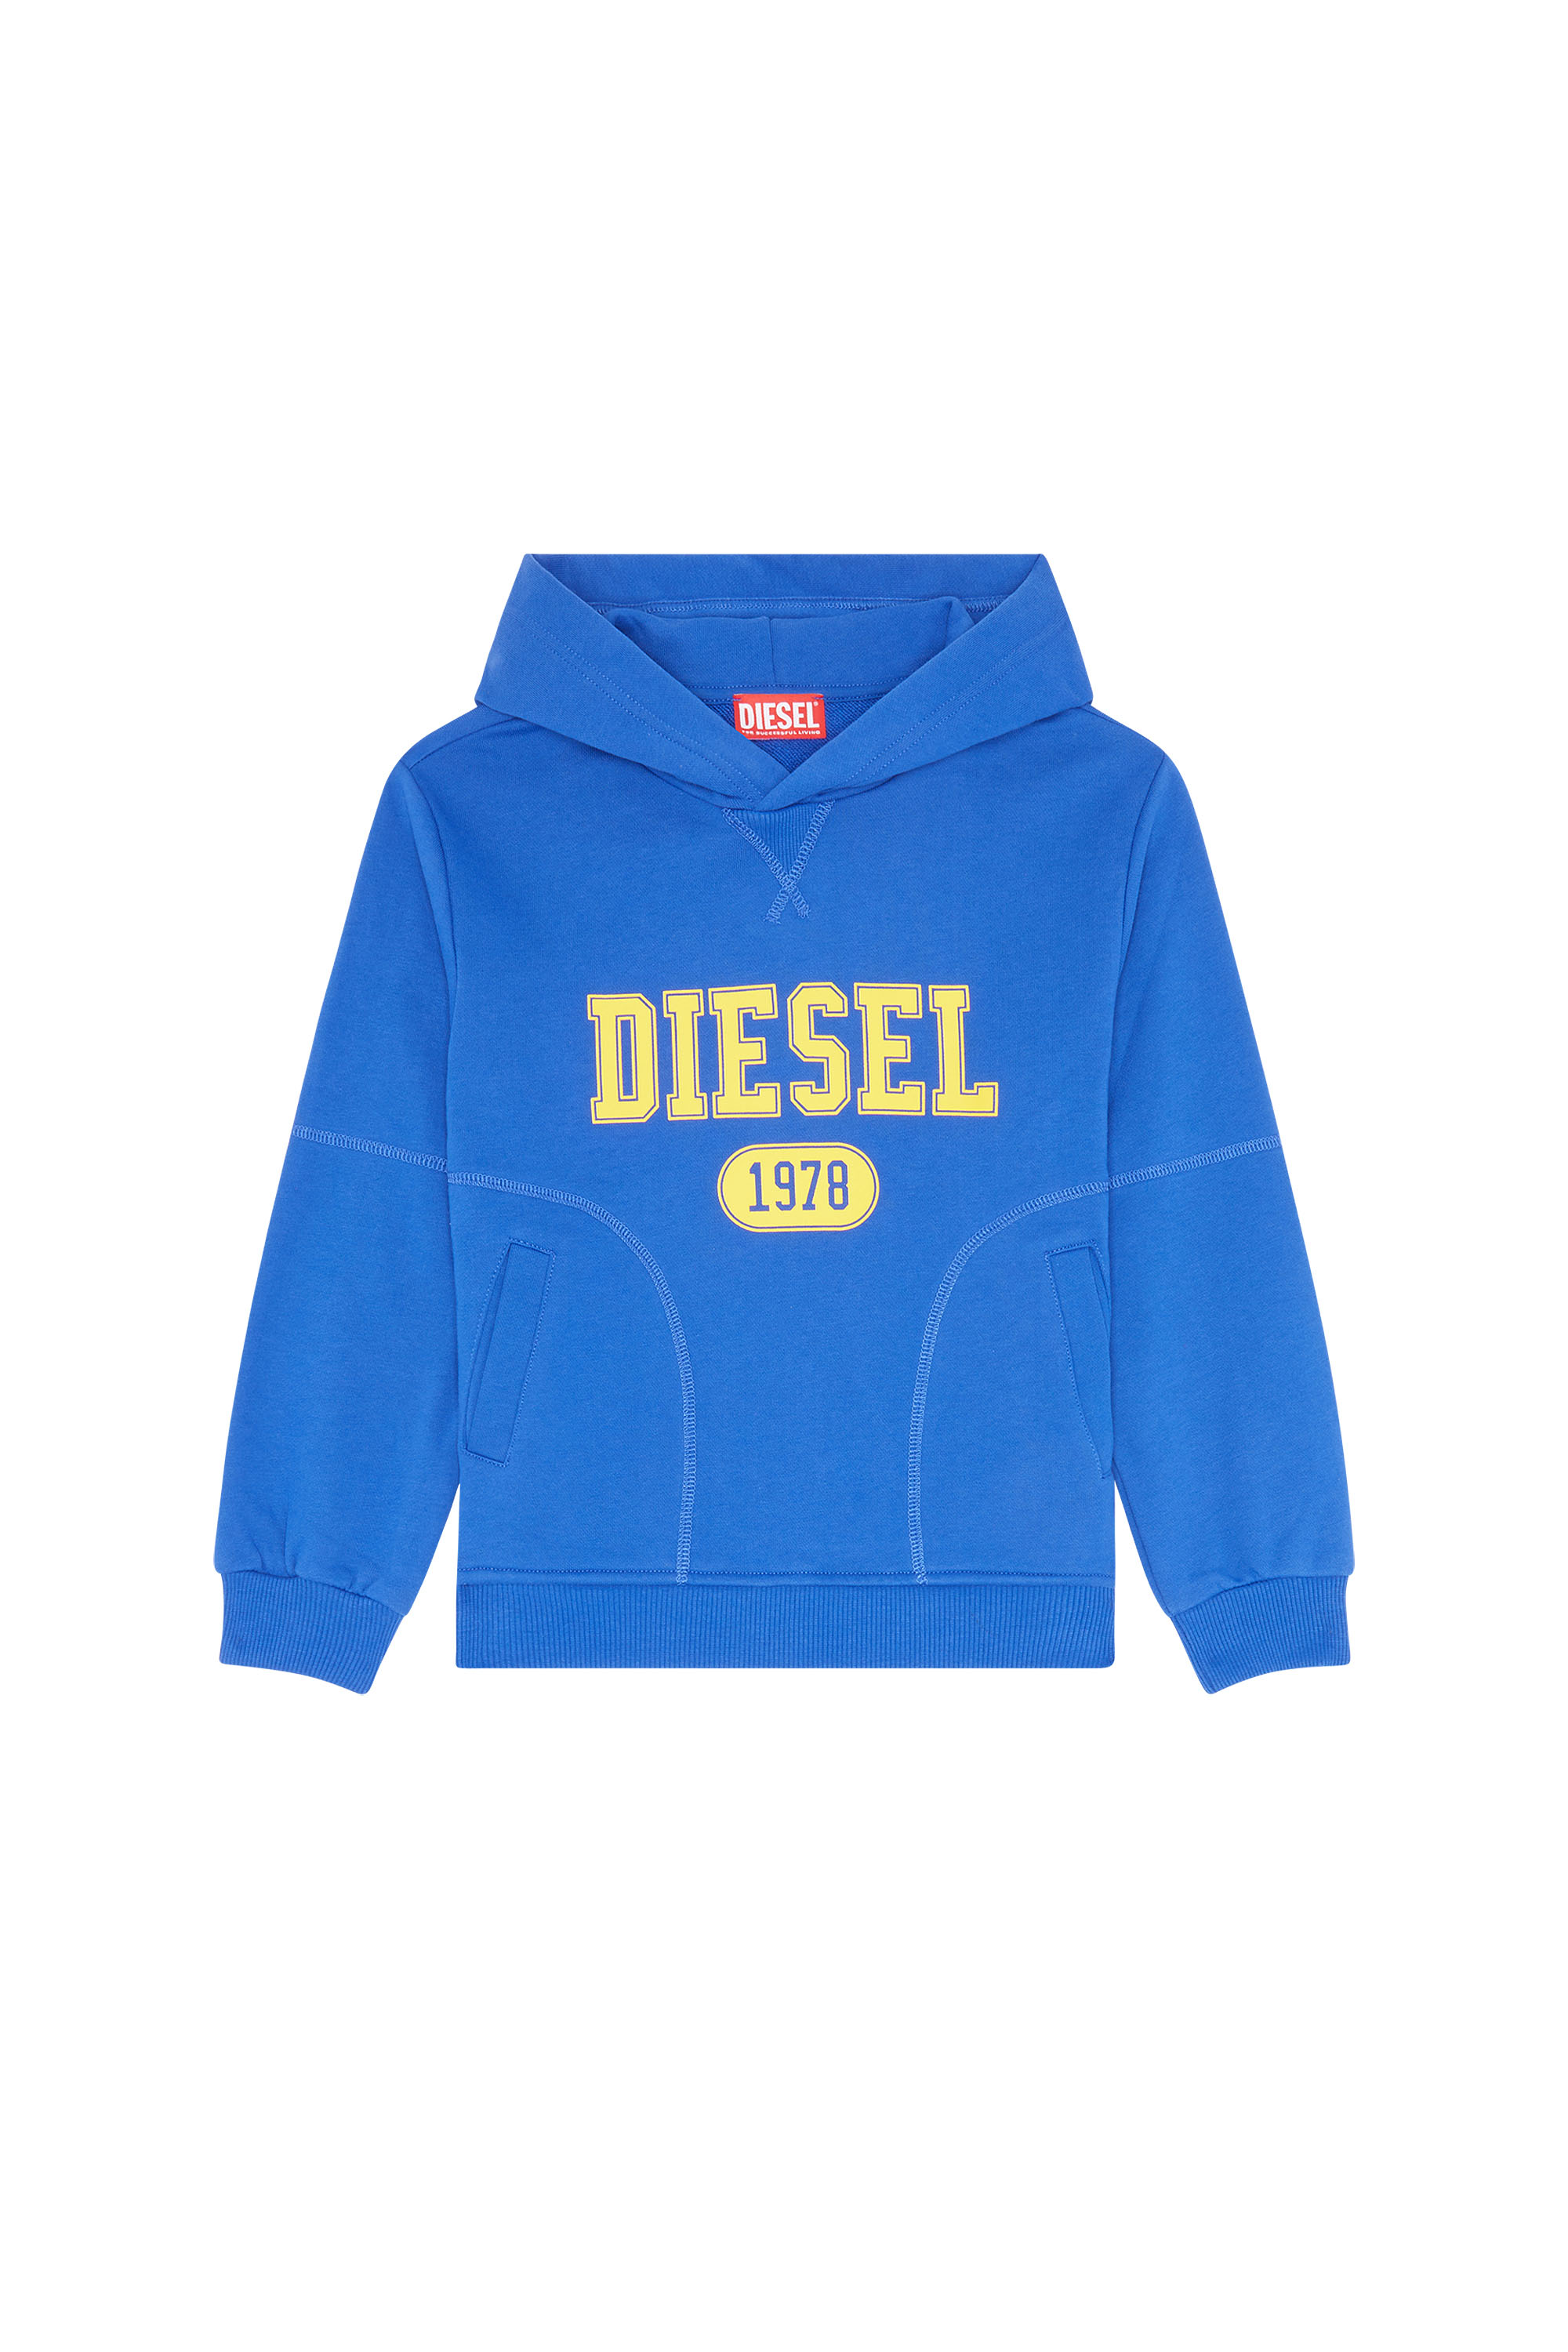 Diesel - SMUSTER OVER, Blue - Image 1